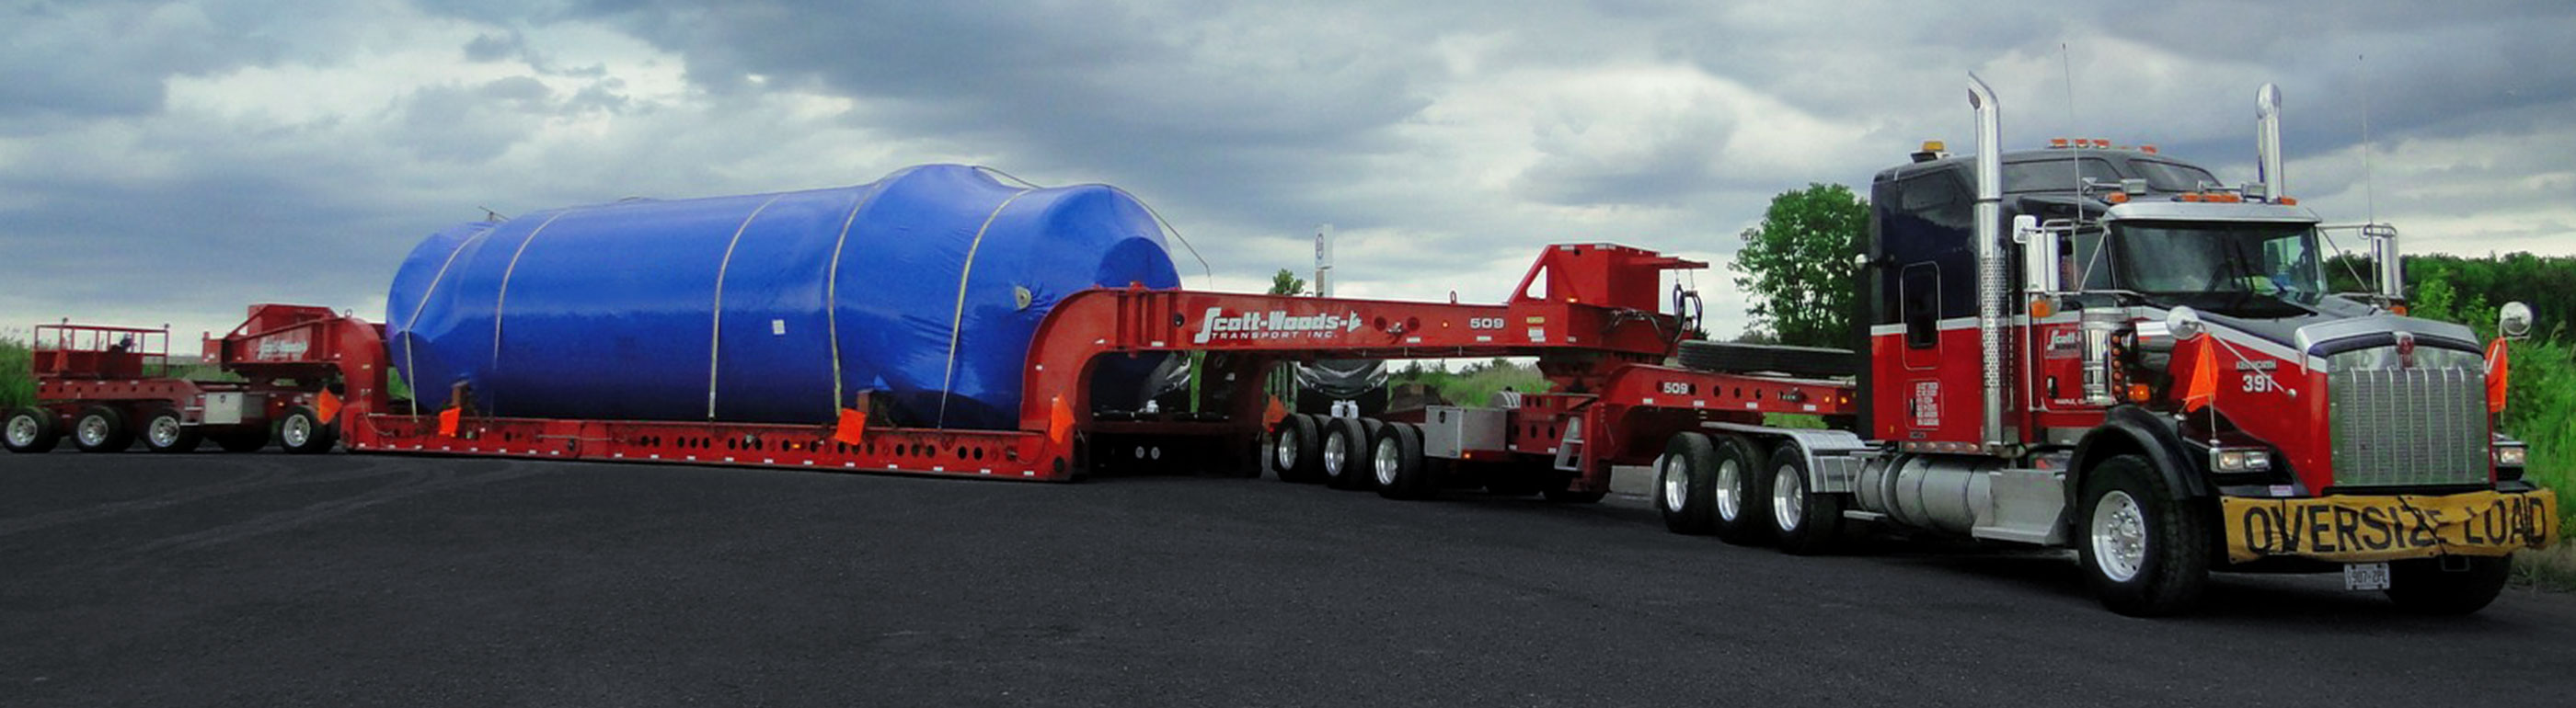 Scott Woods heavy haul truck transporting oversized equipment